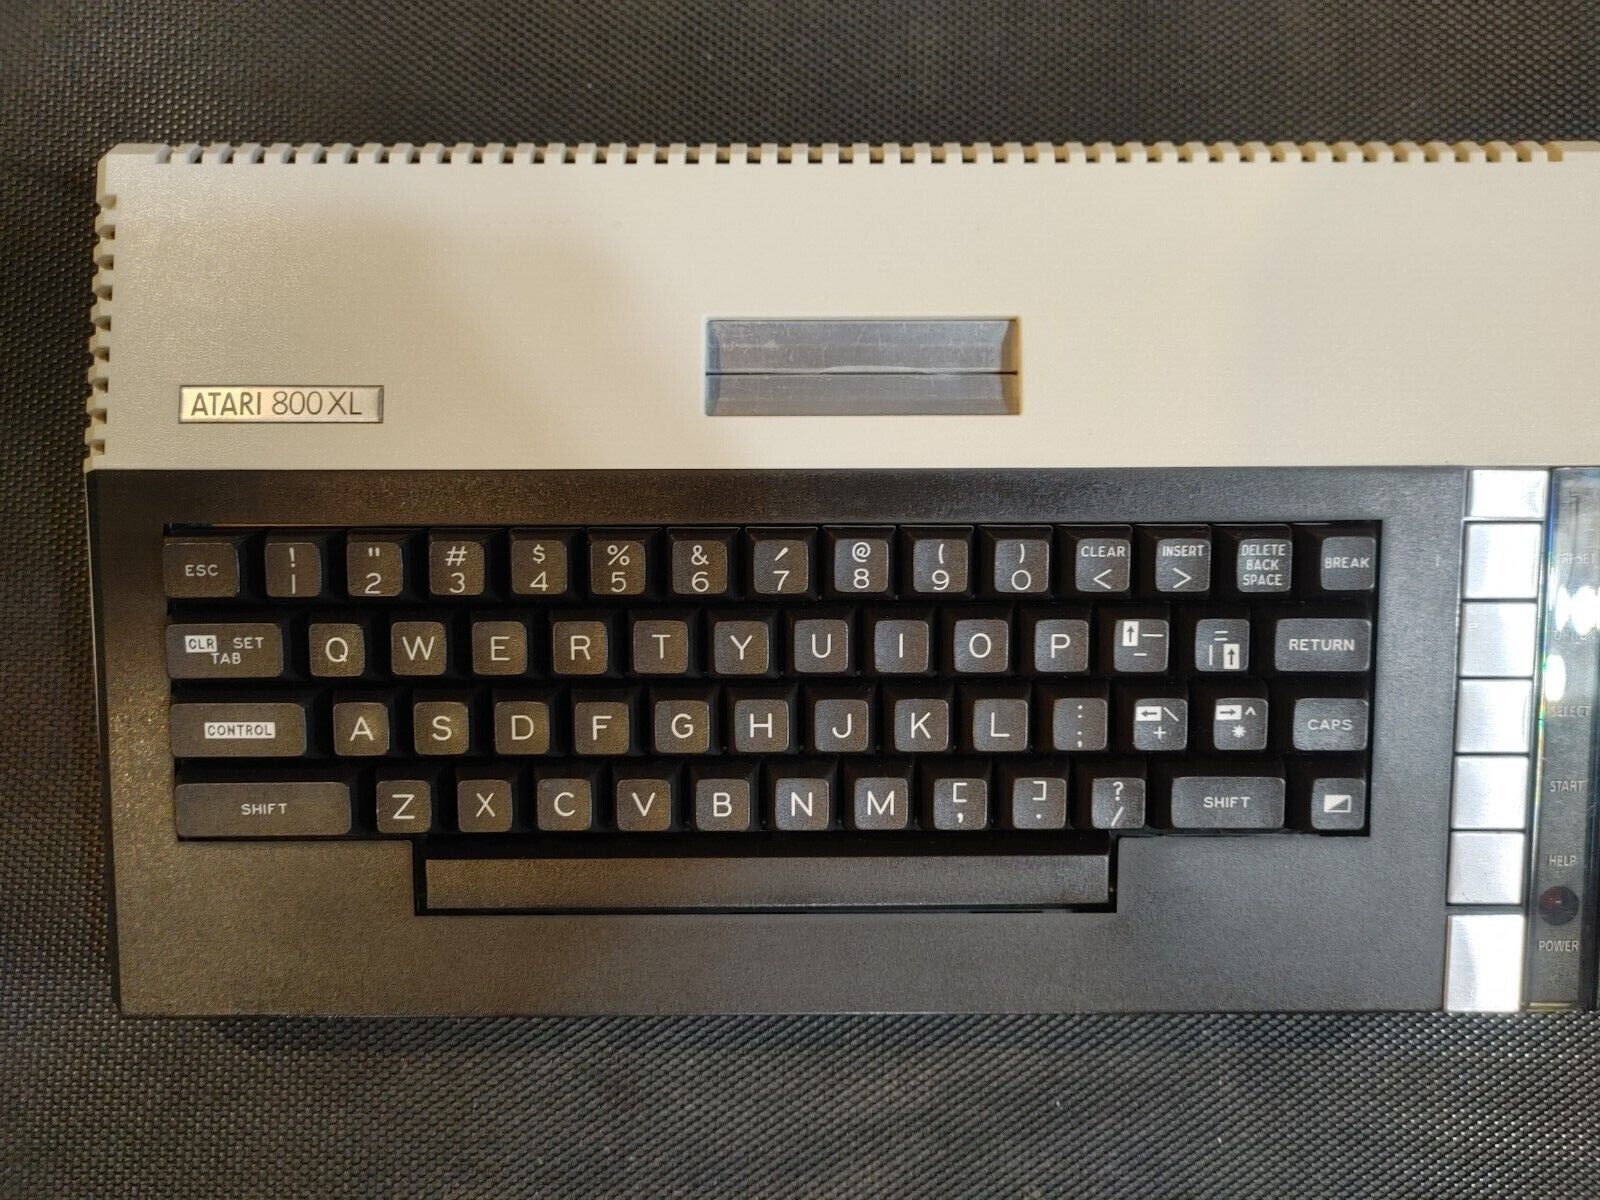 Atari 800XL Computer with Video and RAM upgrades